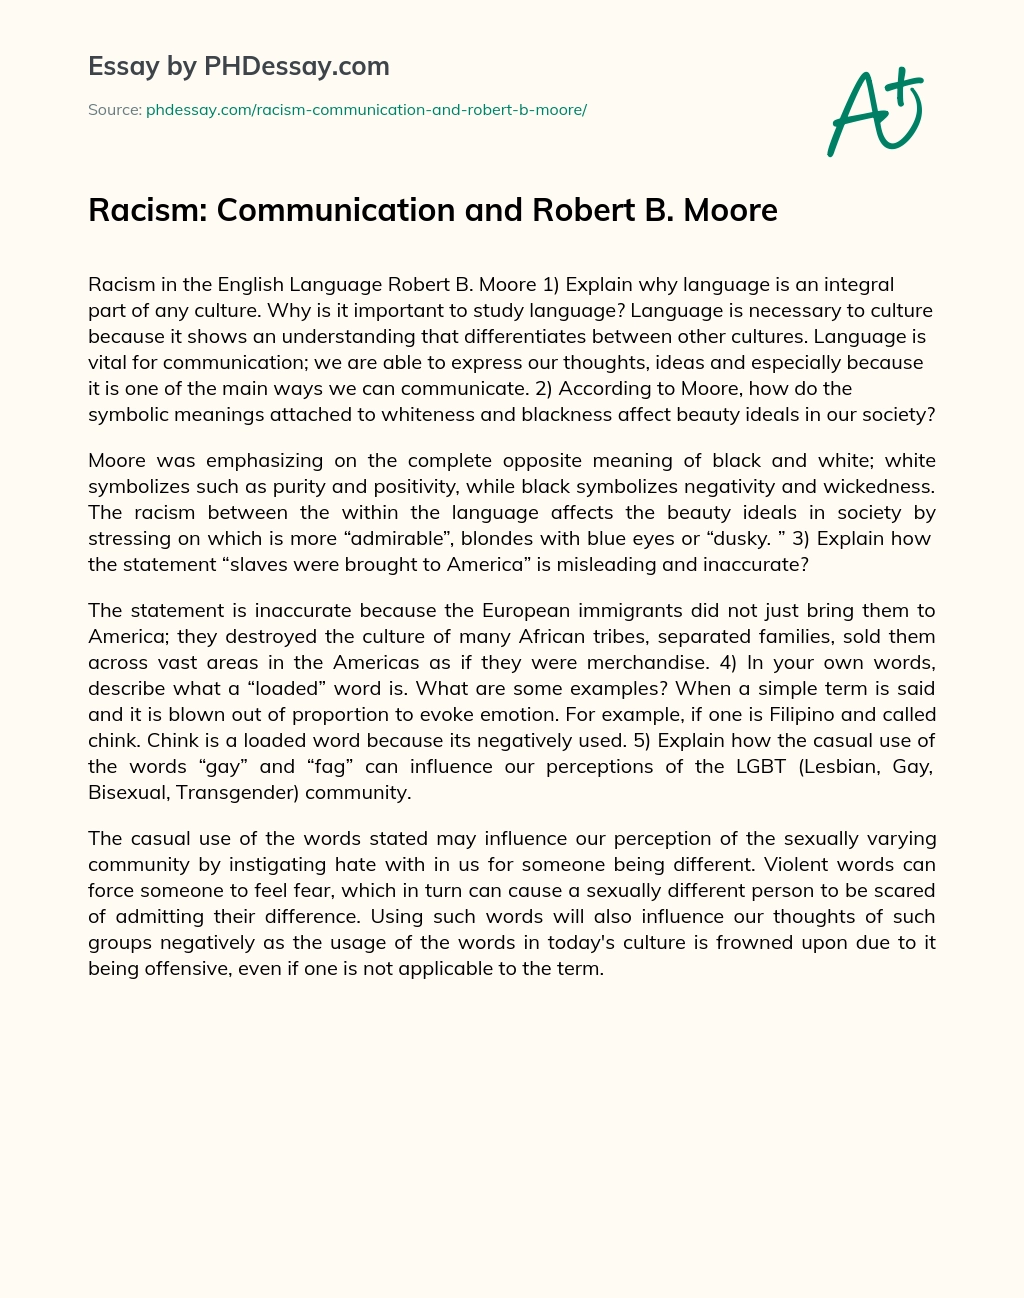 Racism: Communication and Robert B. Moore essay